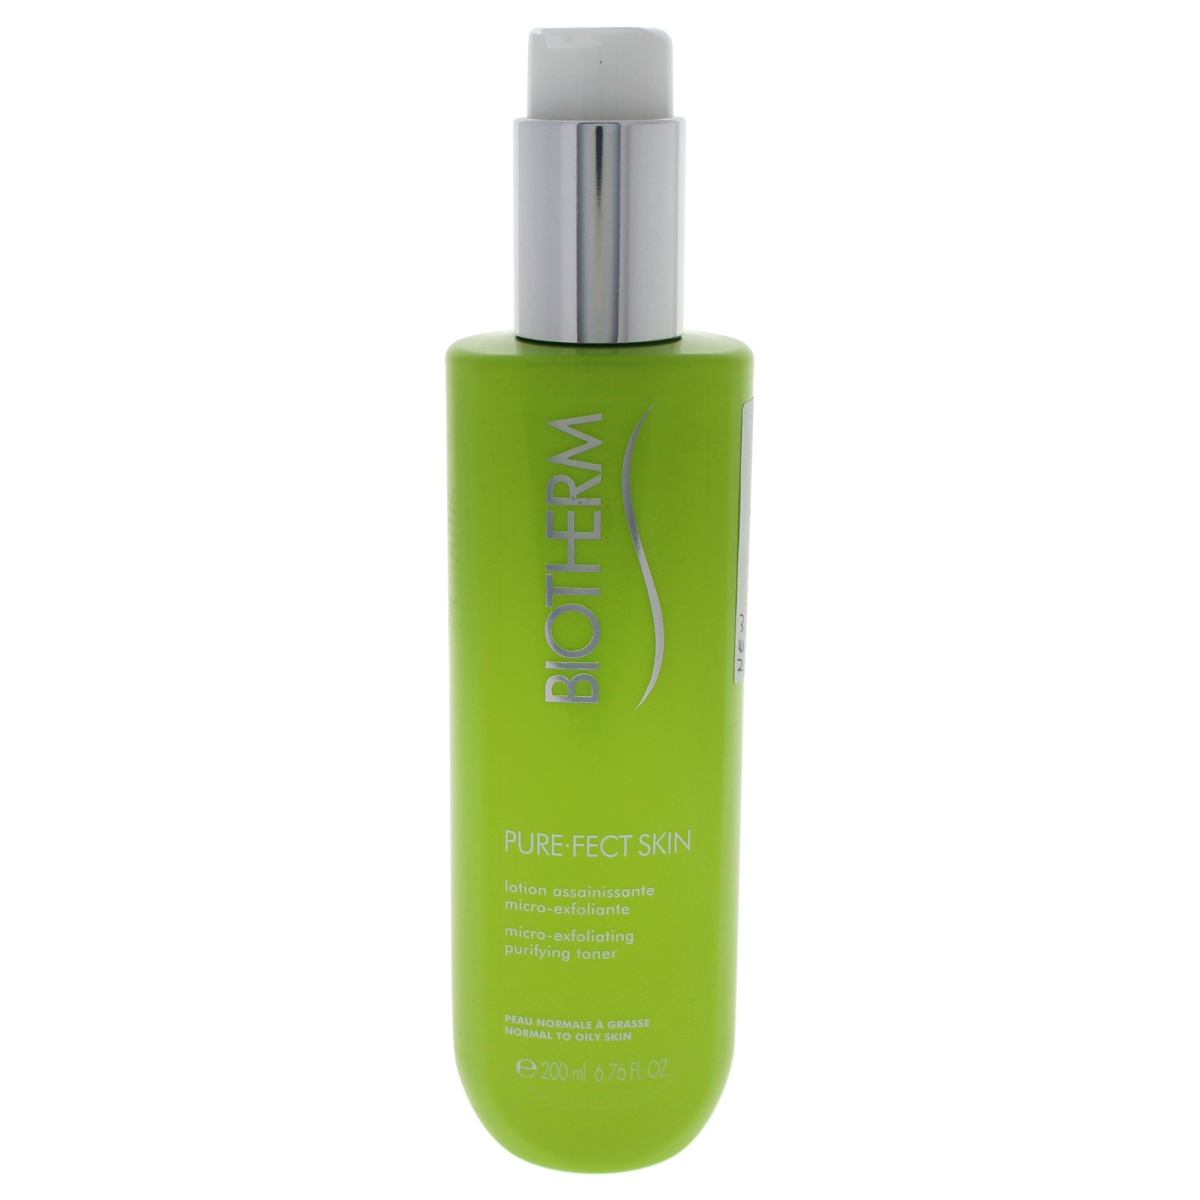 U-sc-2448 6.76 Oz Unisex Pure-fect Skin Micro-exfoliating Purifying Toner - Normal To Oily Skin